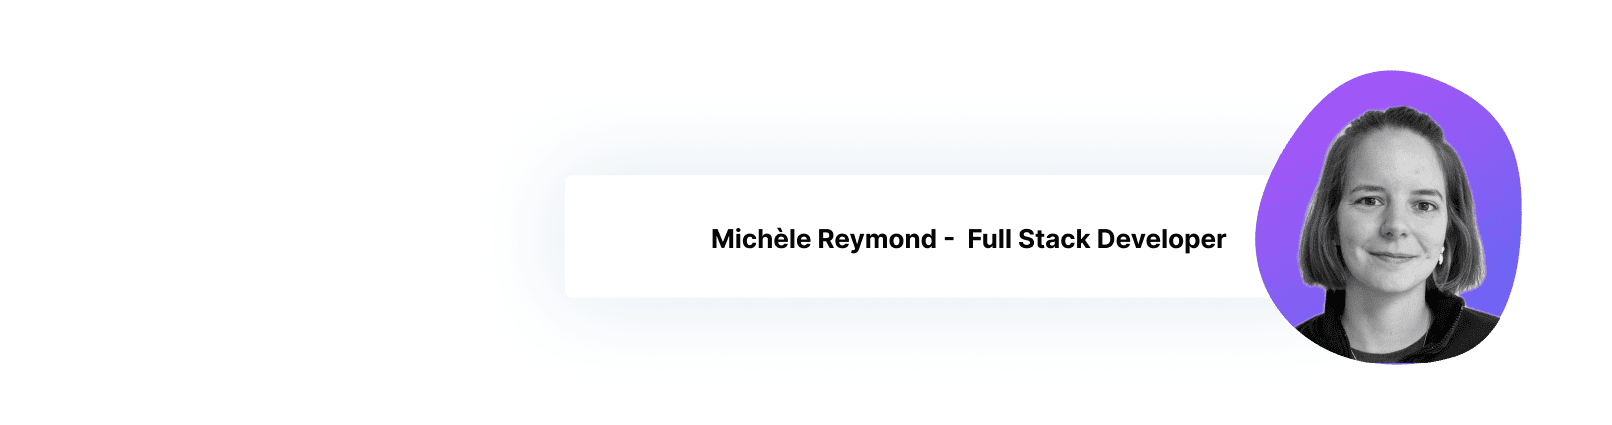 Michèle Reymond's introduction